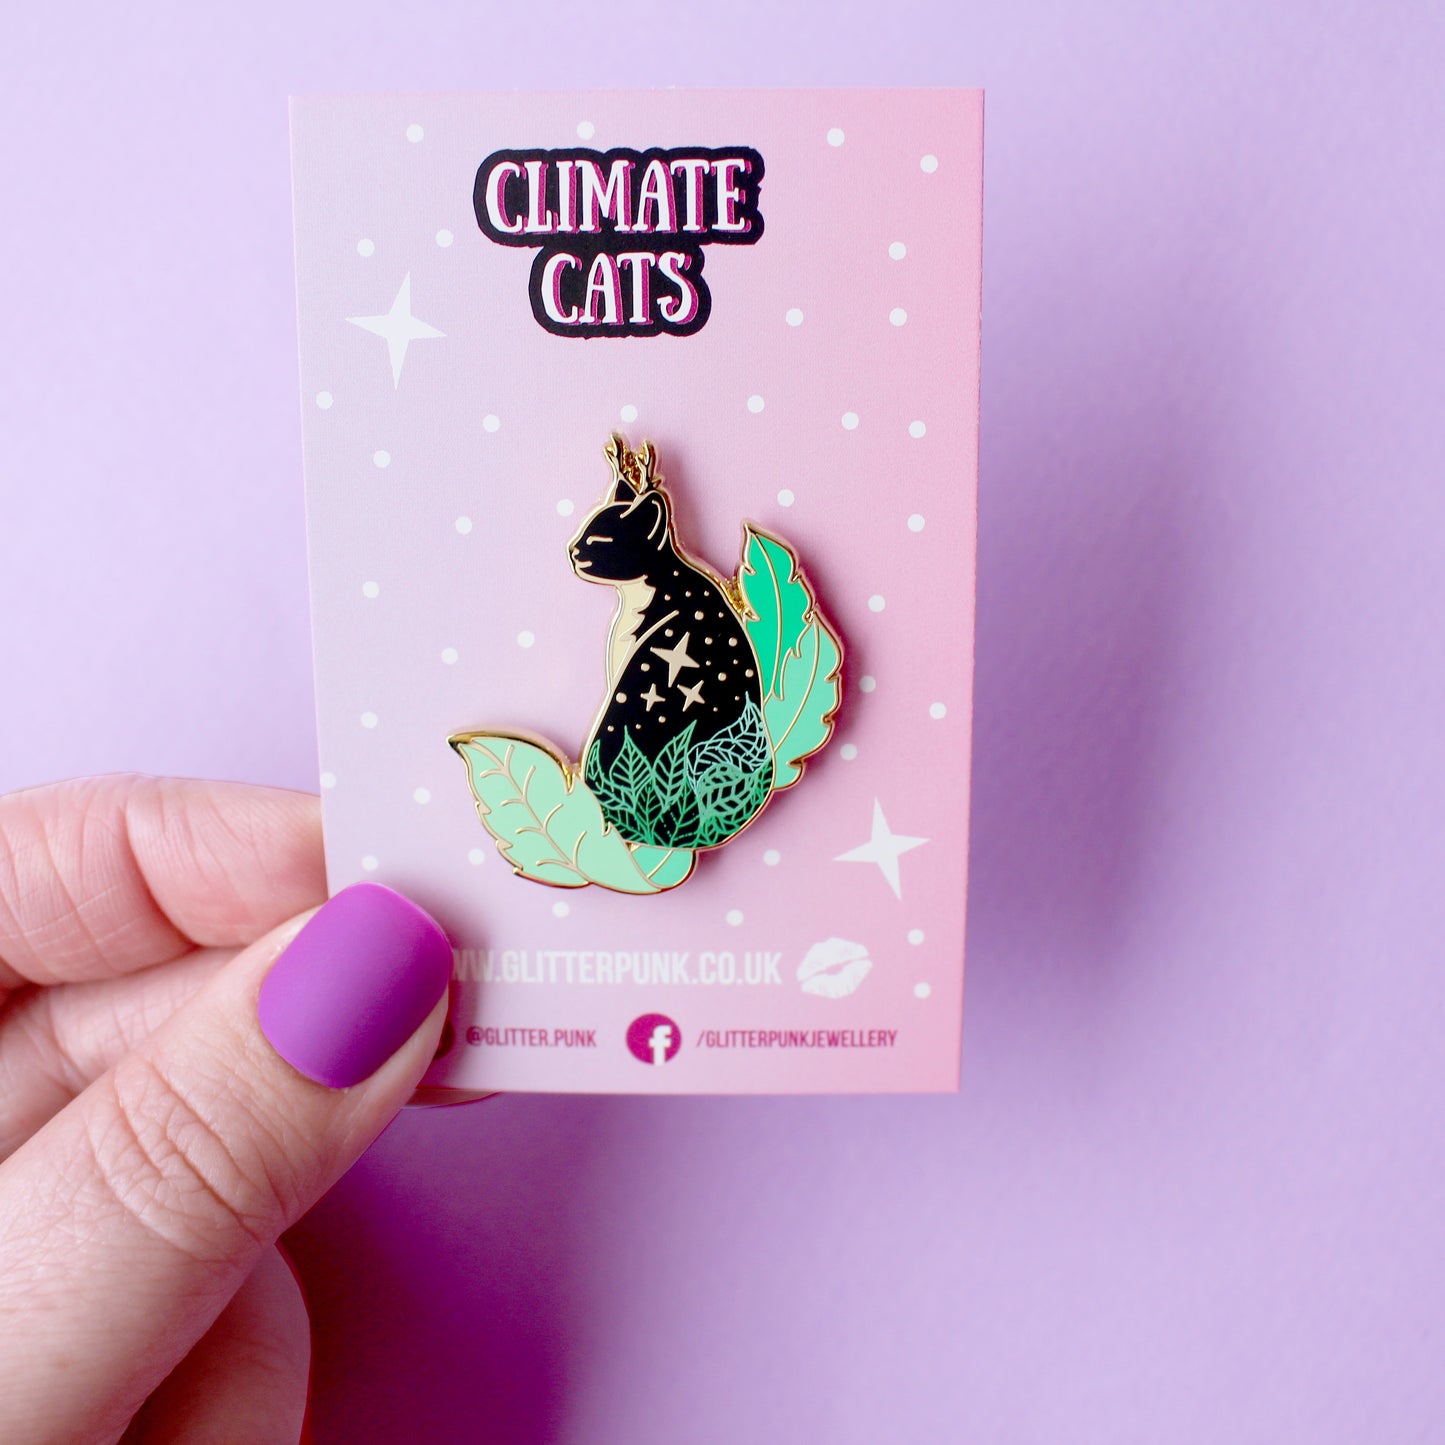 Earth Cat Enamel Pin - Climate Cats